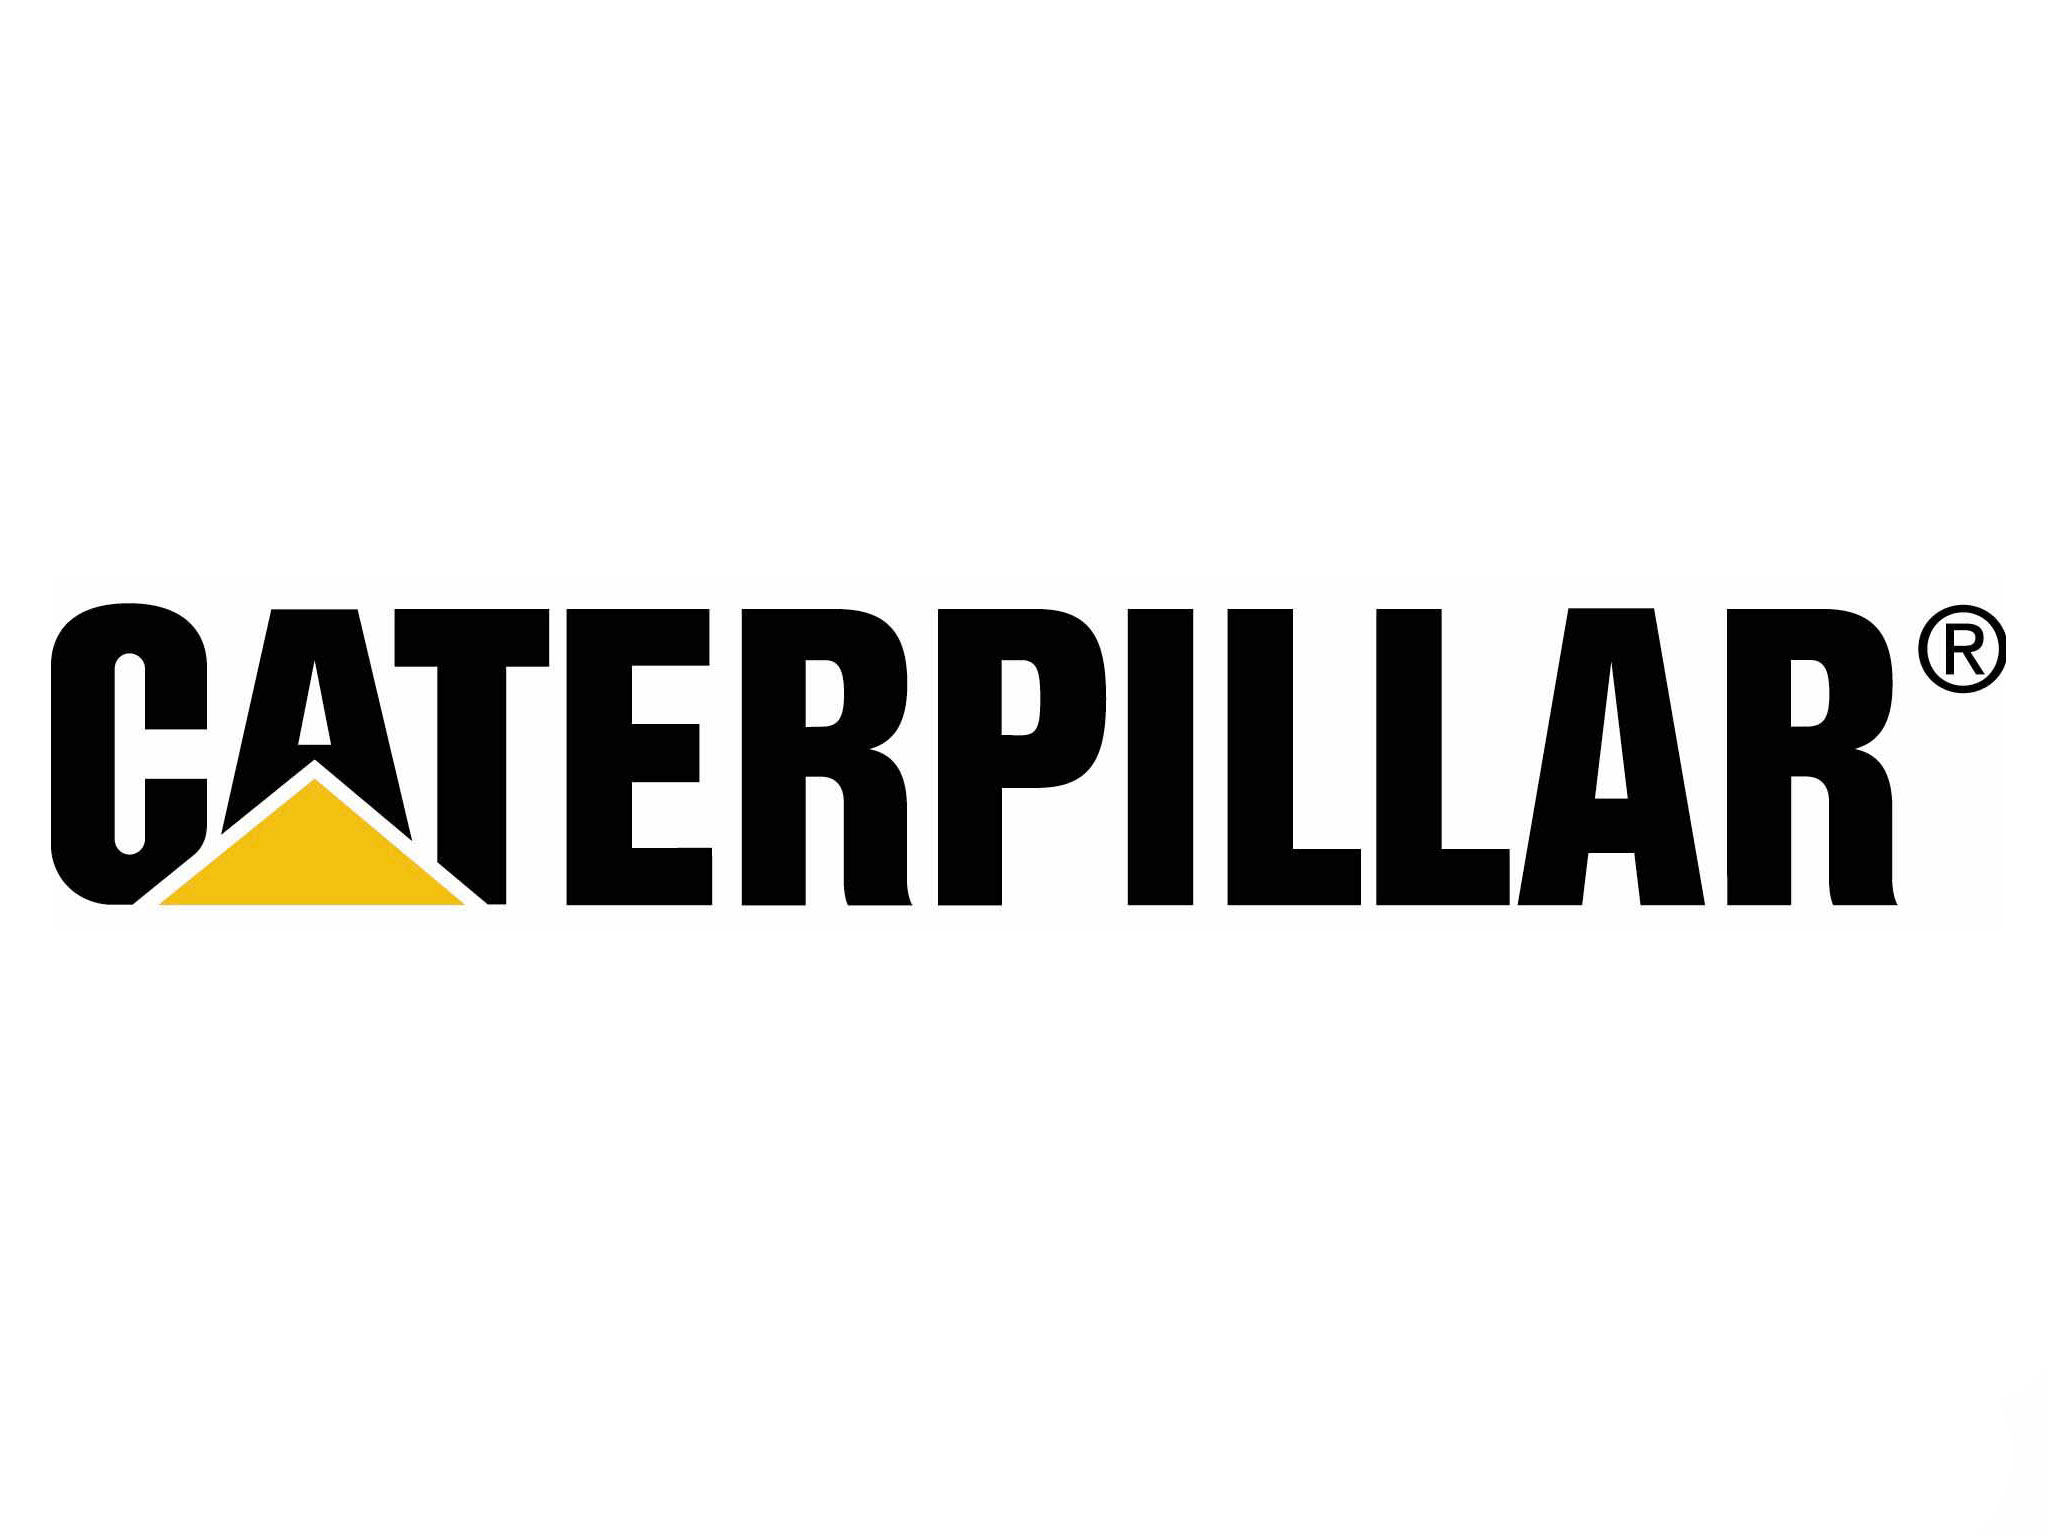 Zeppelin Caterpillar Logo photo - 1